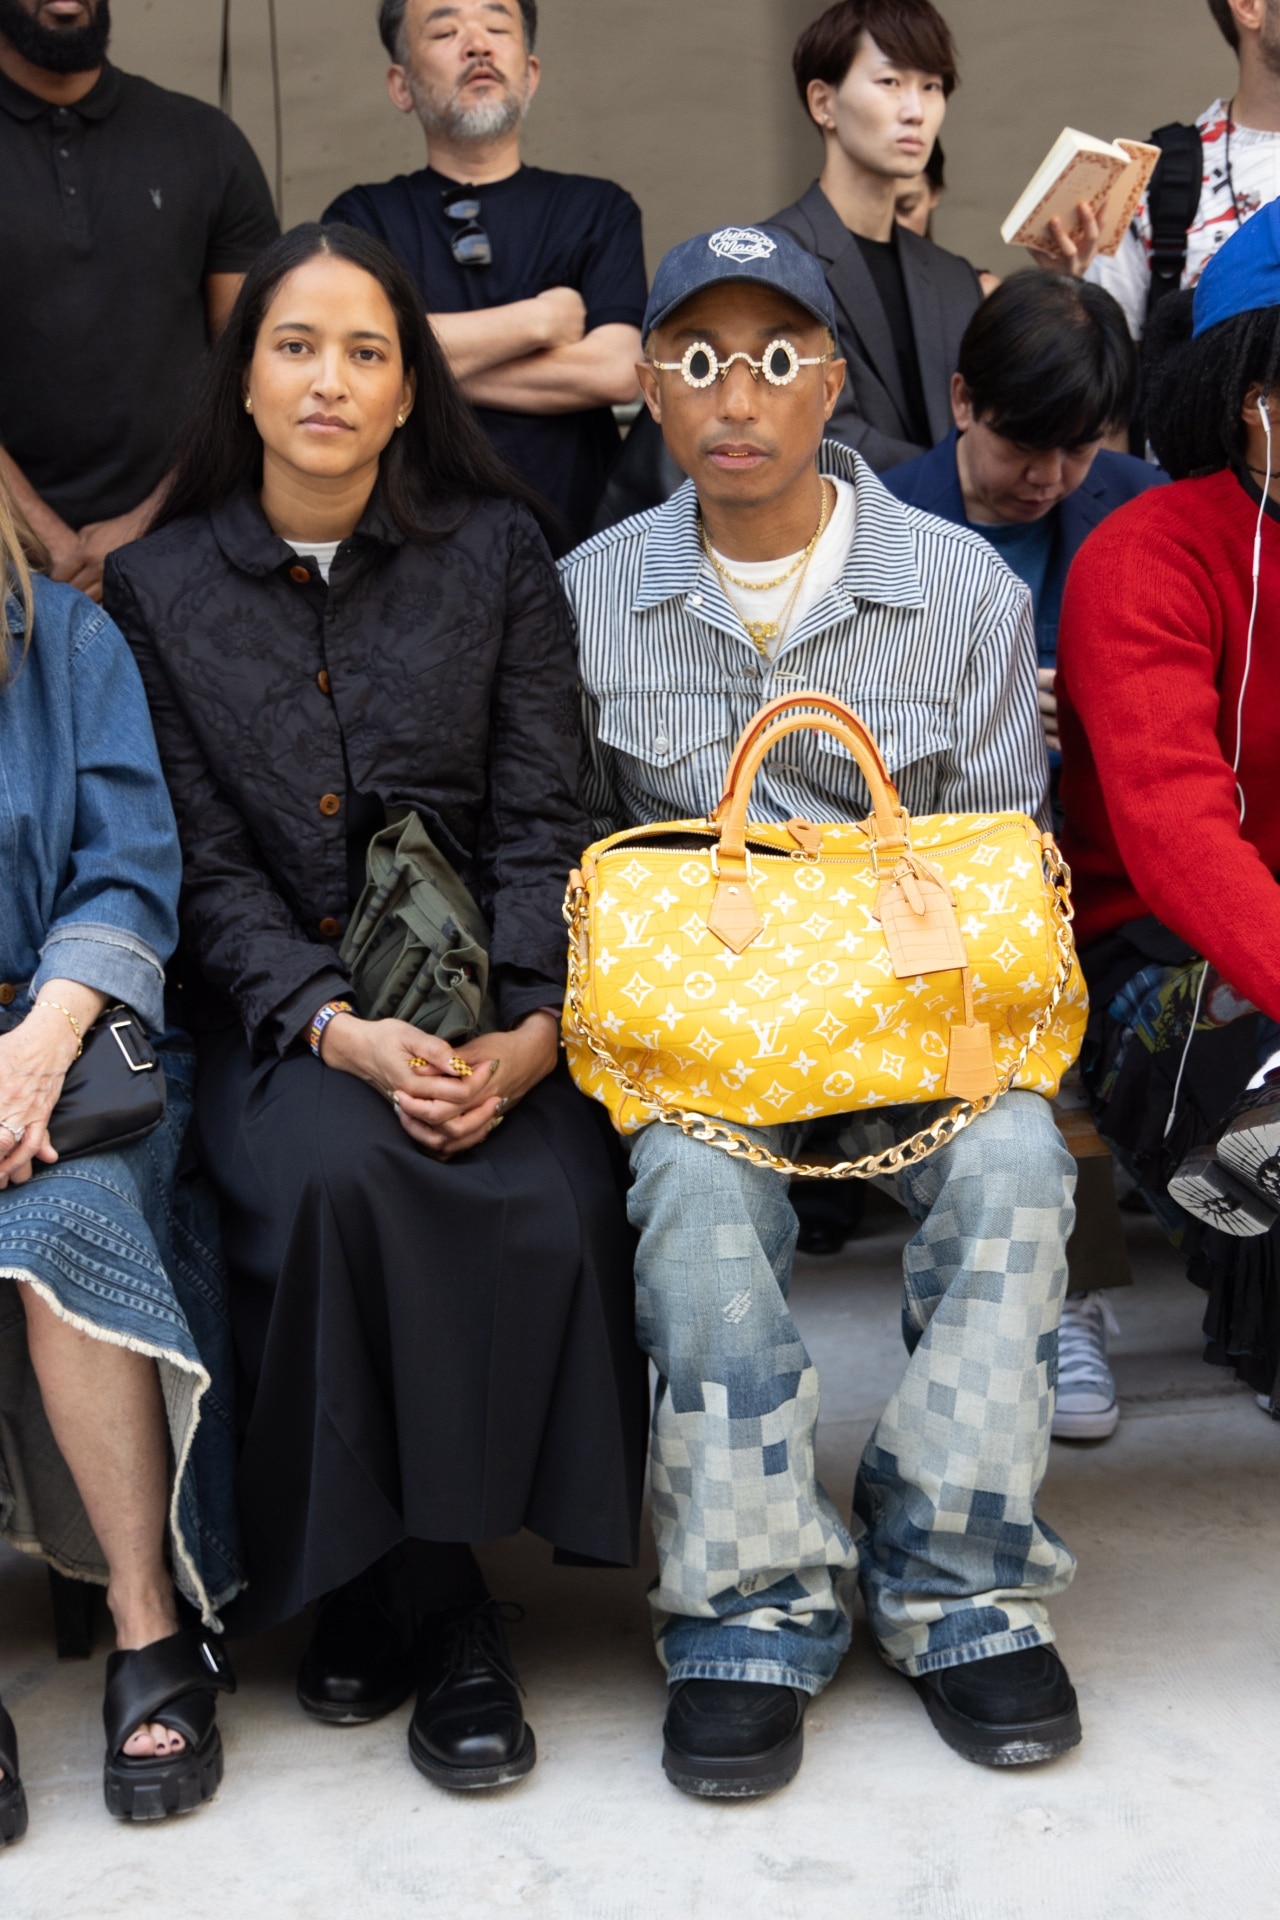 Pharrell shows off the 'Millionaire' Louis Vuitton duffle bag